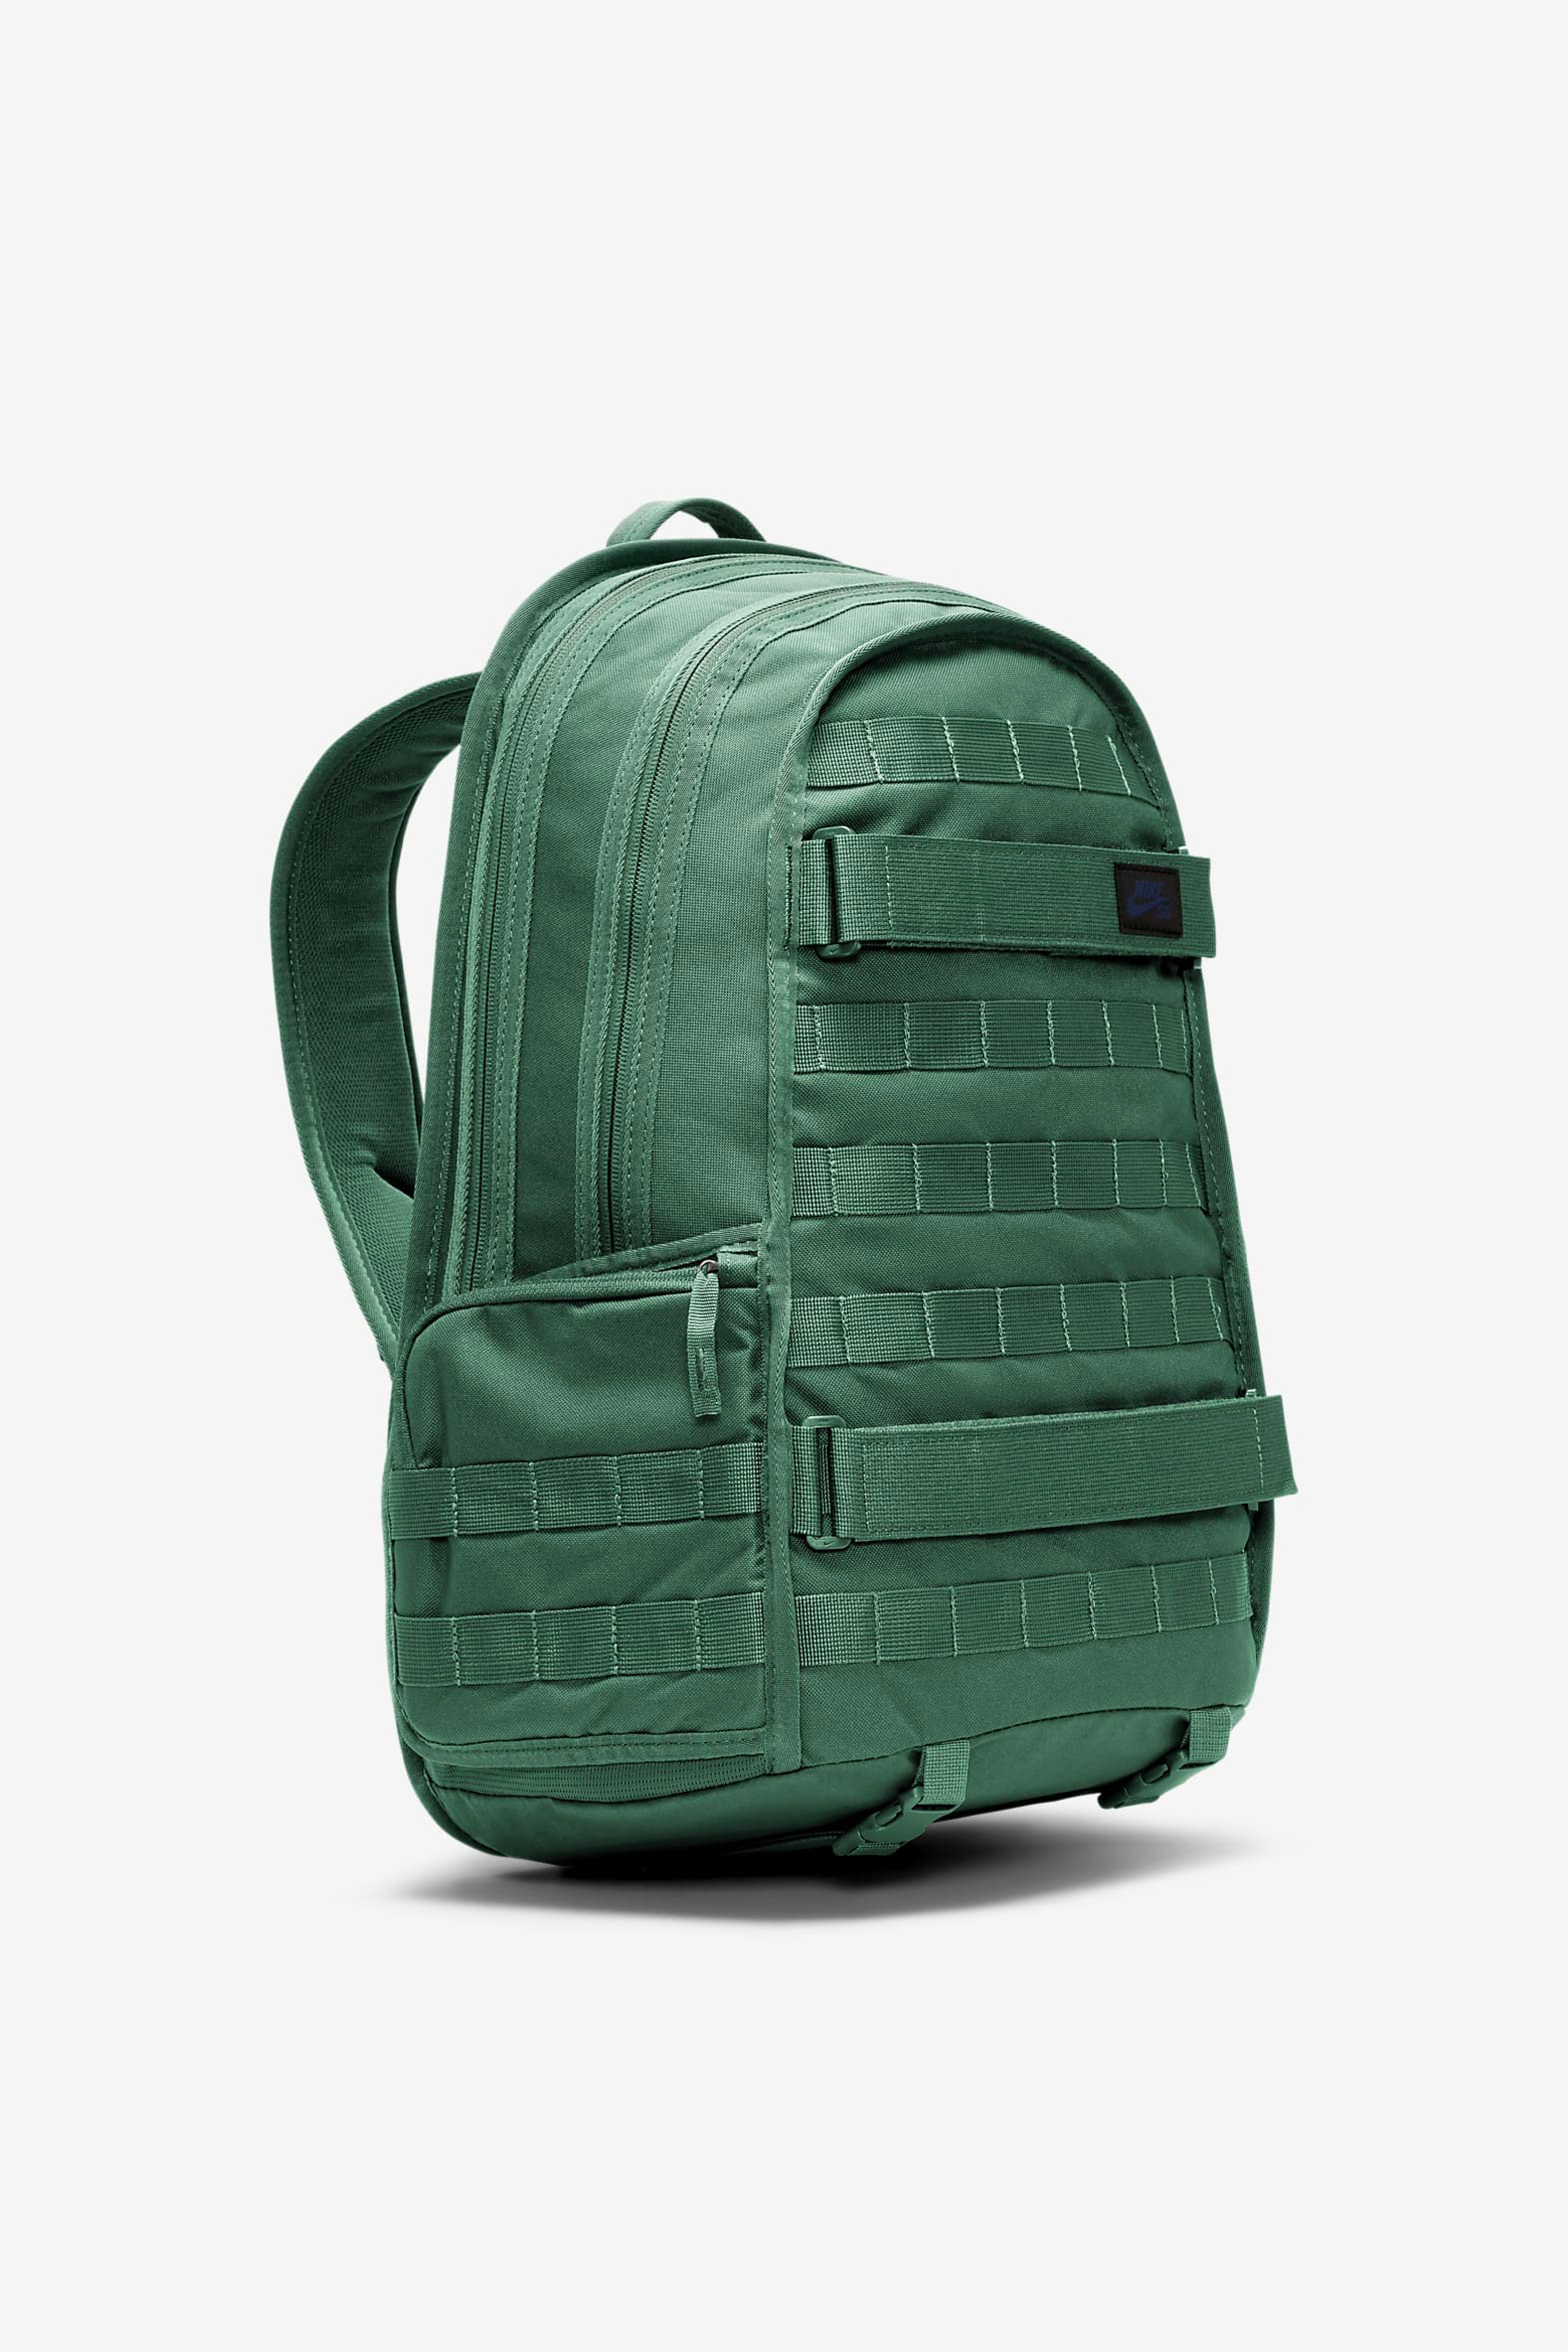 Selectshop FRAME - NIKE SB Nike SB RPM Backpack All-accessories Dubai